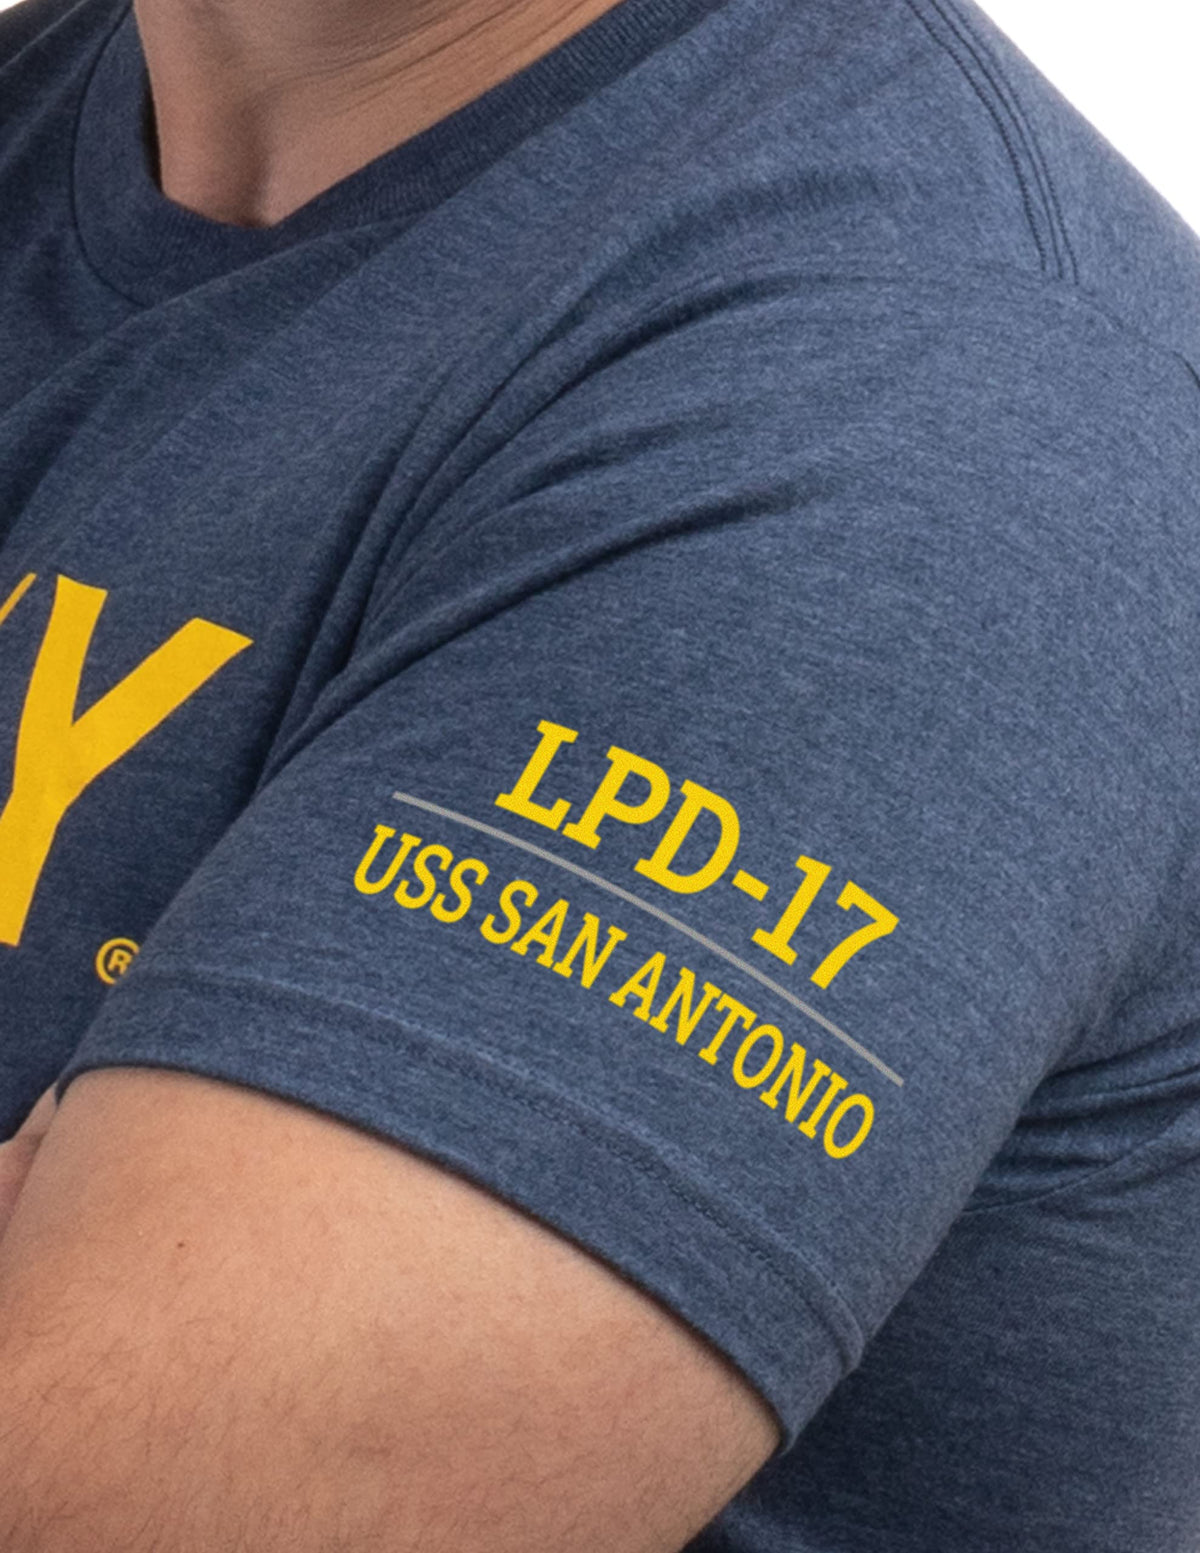 USS San Antonio, LPD-17 | U.S. Navy Sailor Veteran USN United States Naval T-shirt for Men Women